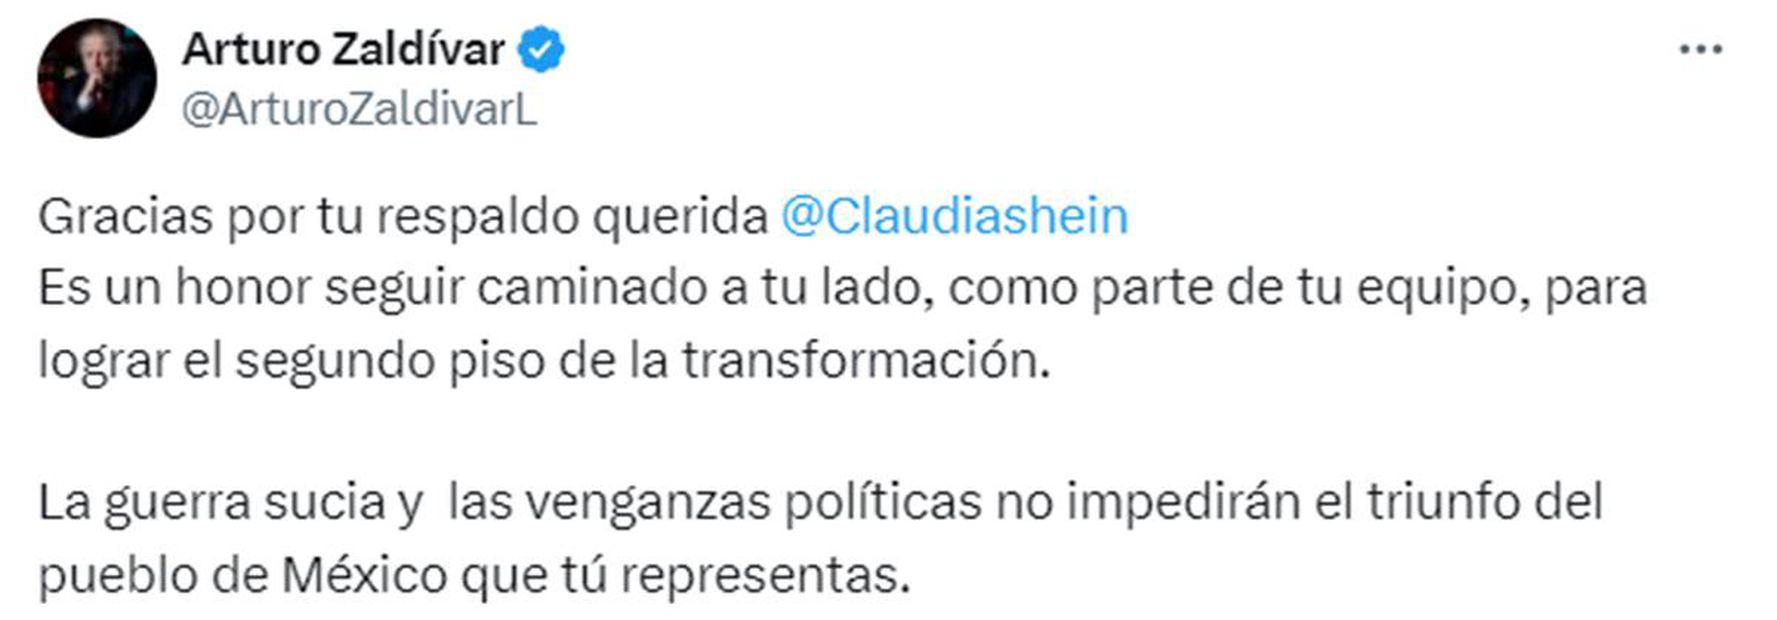 Post del ministro en retiro, Arturo Zaldívar. Foto: captura de pantalla